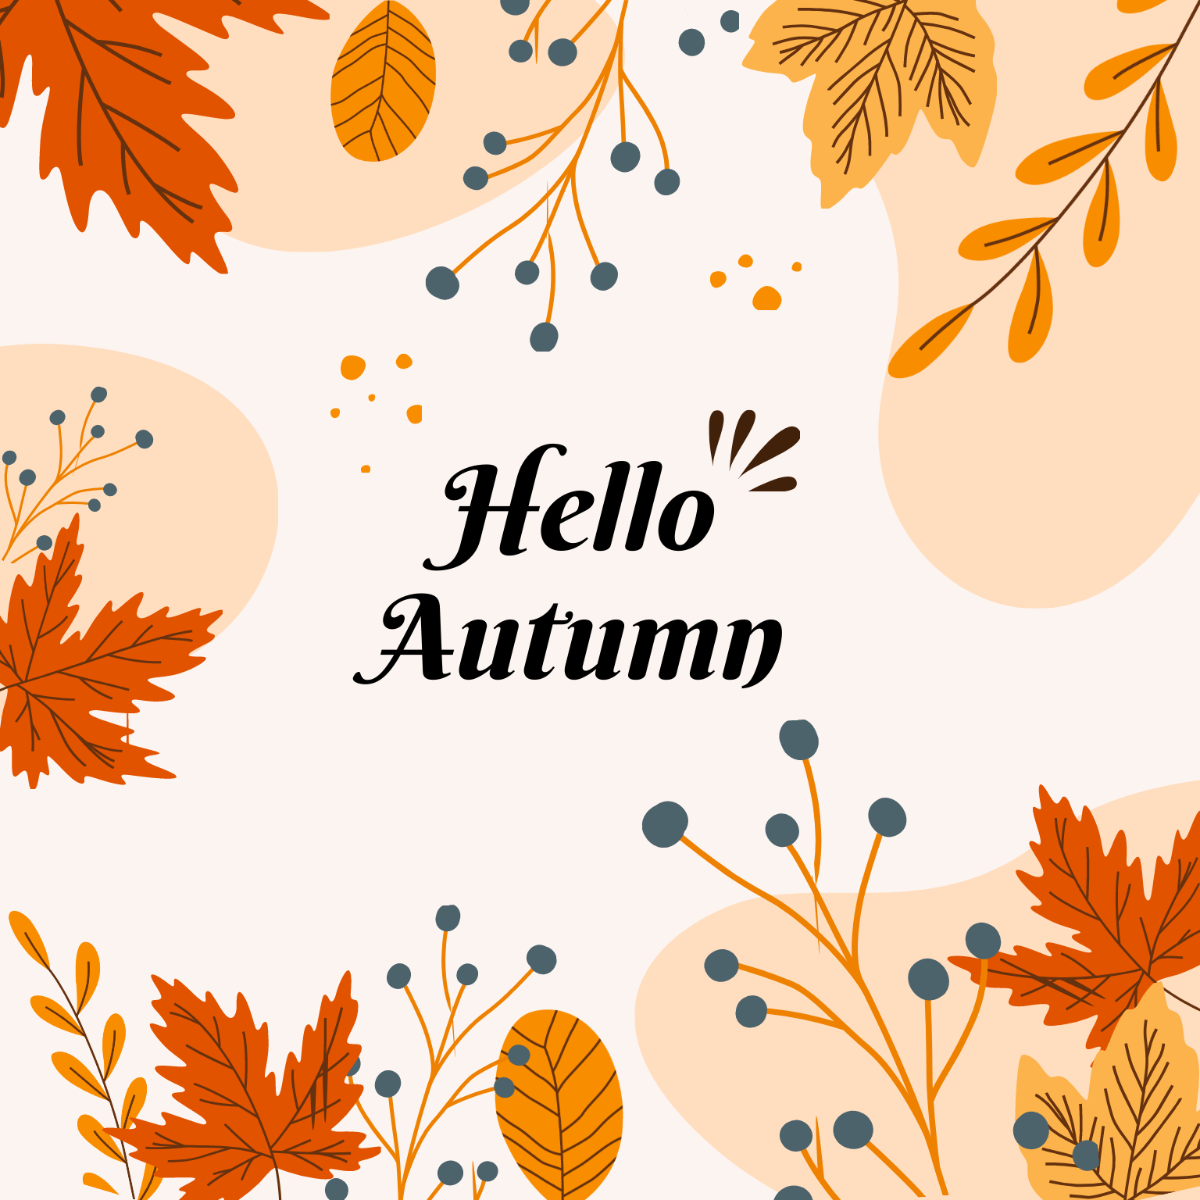 Hello Autumn/Fall Leaves Vector Template